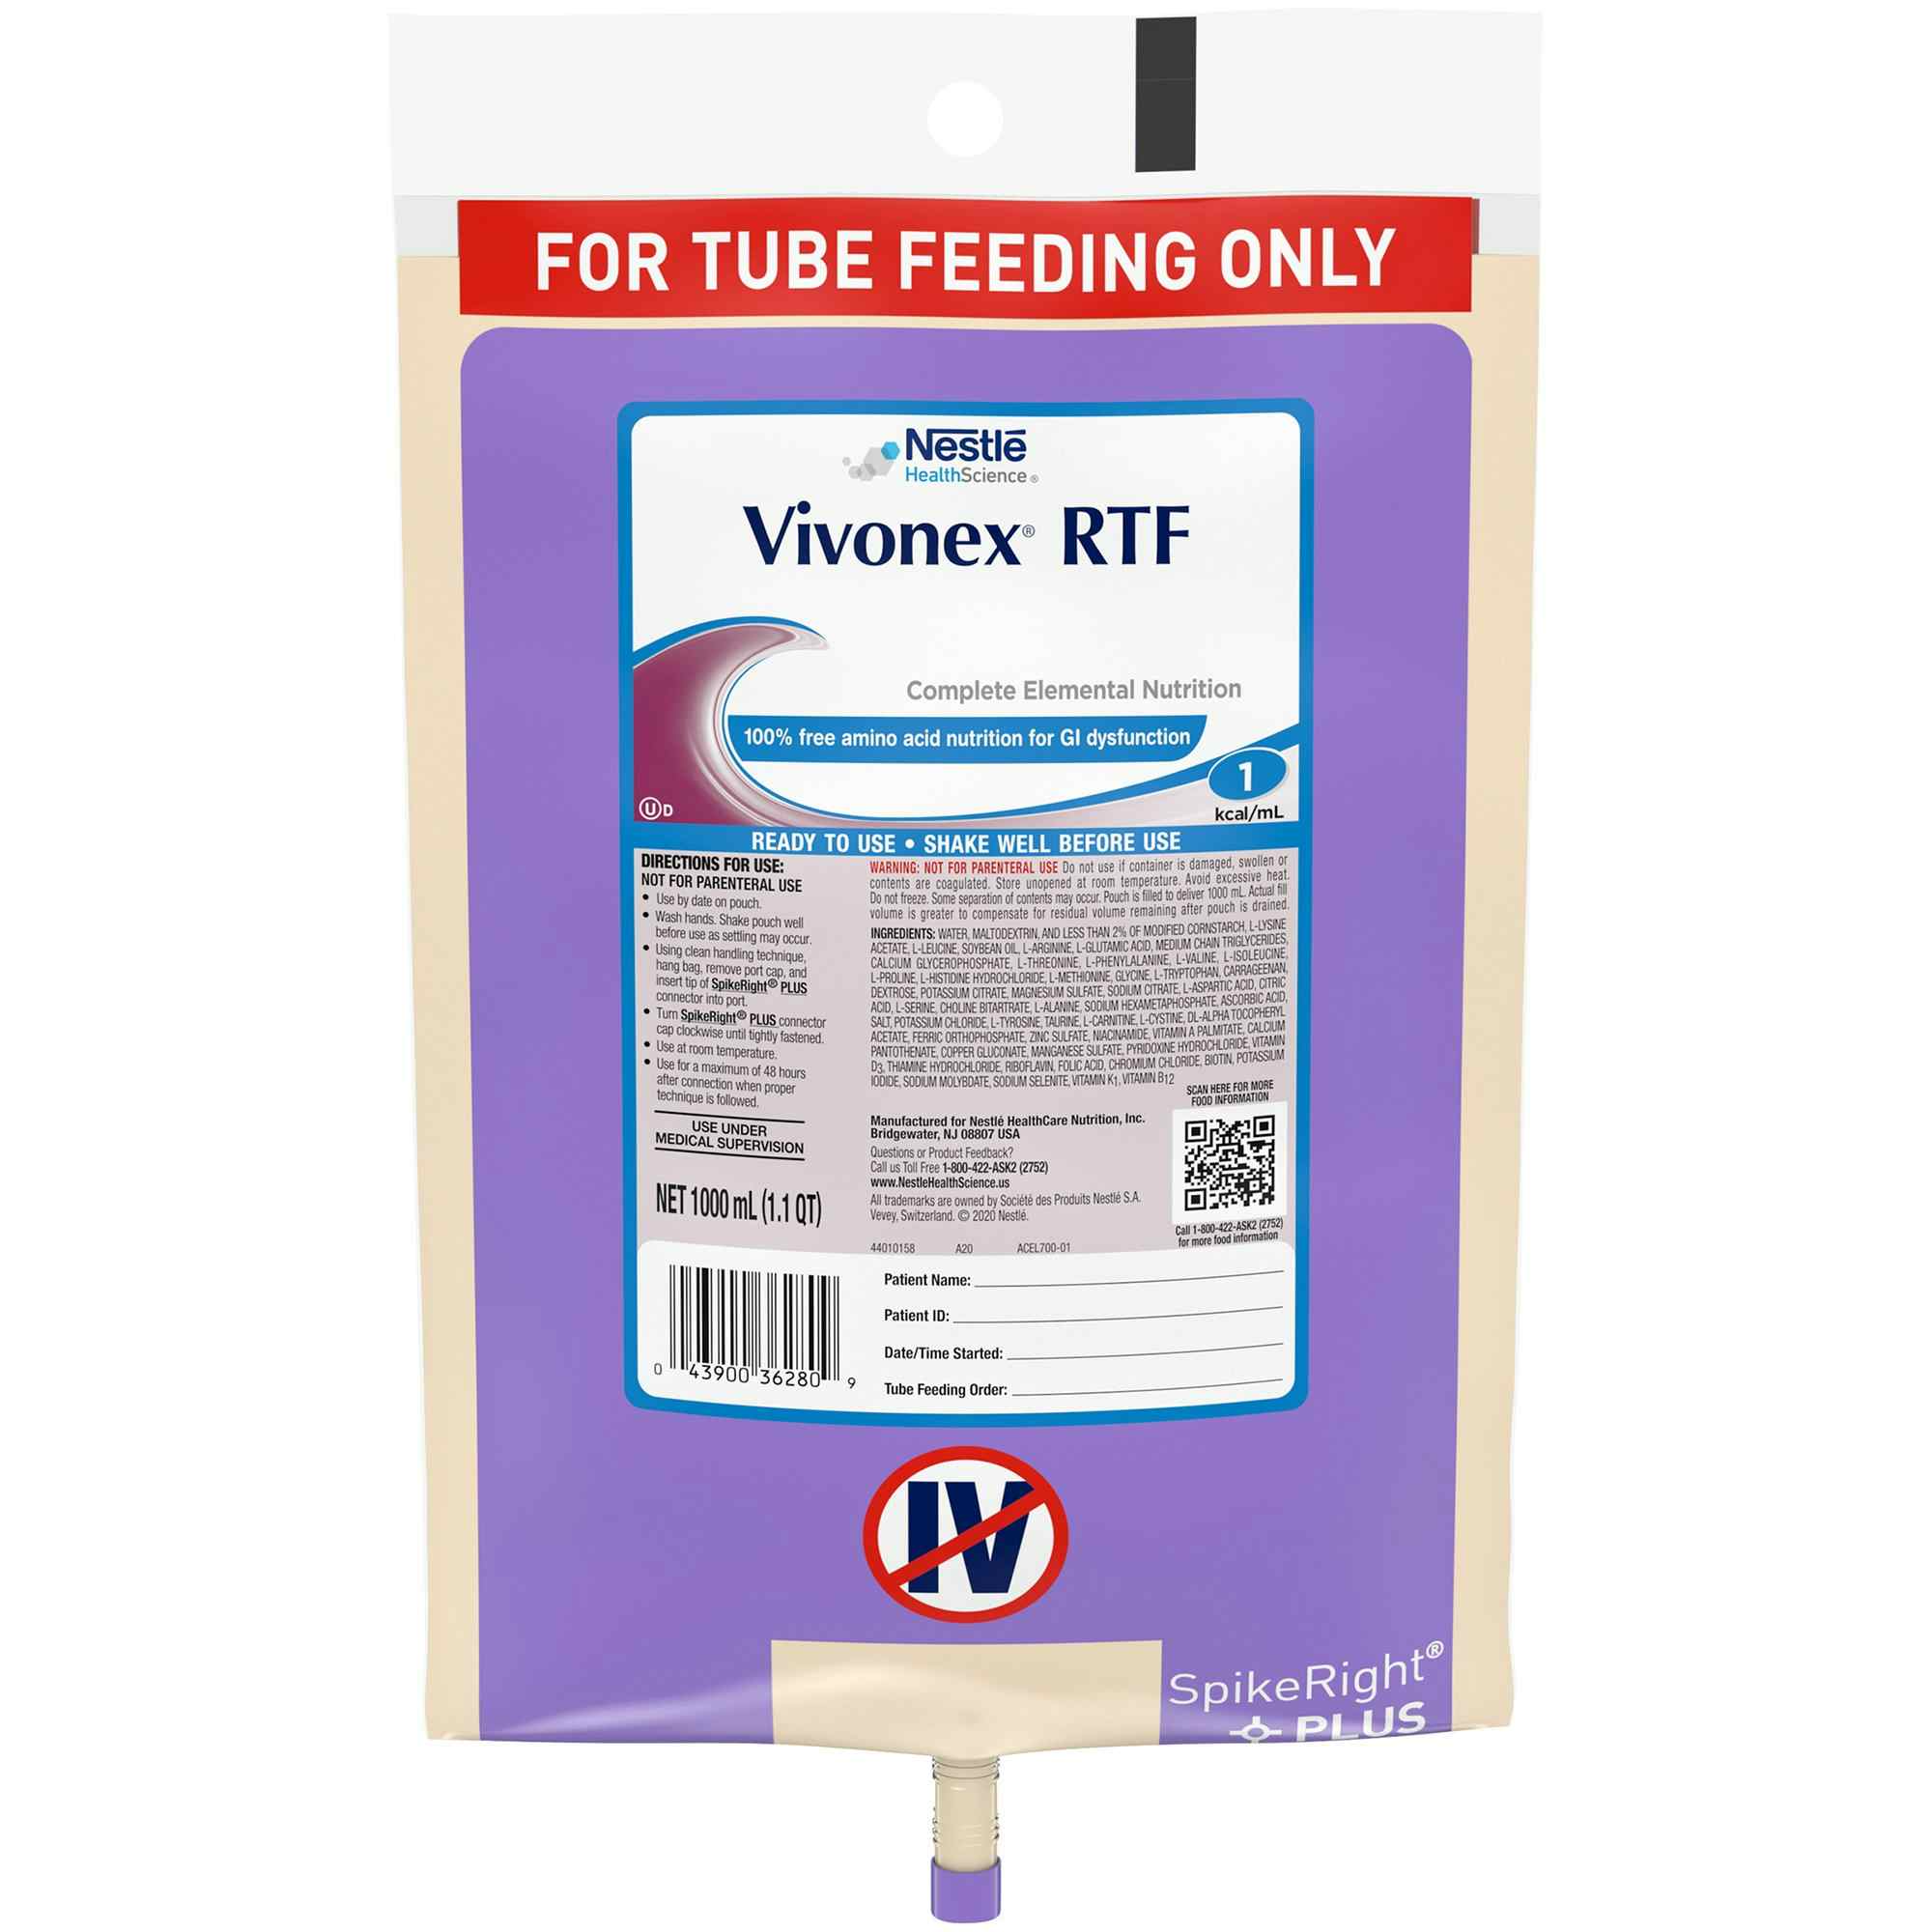 Nestle HealthScience Vivonex RTF Complete Elemental Nutrition Tube Feeding Formula, 33.8 oz., 10043900362806, Case of 6